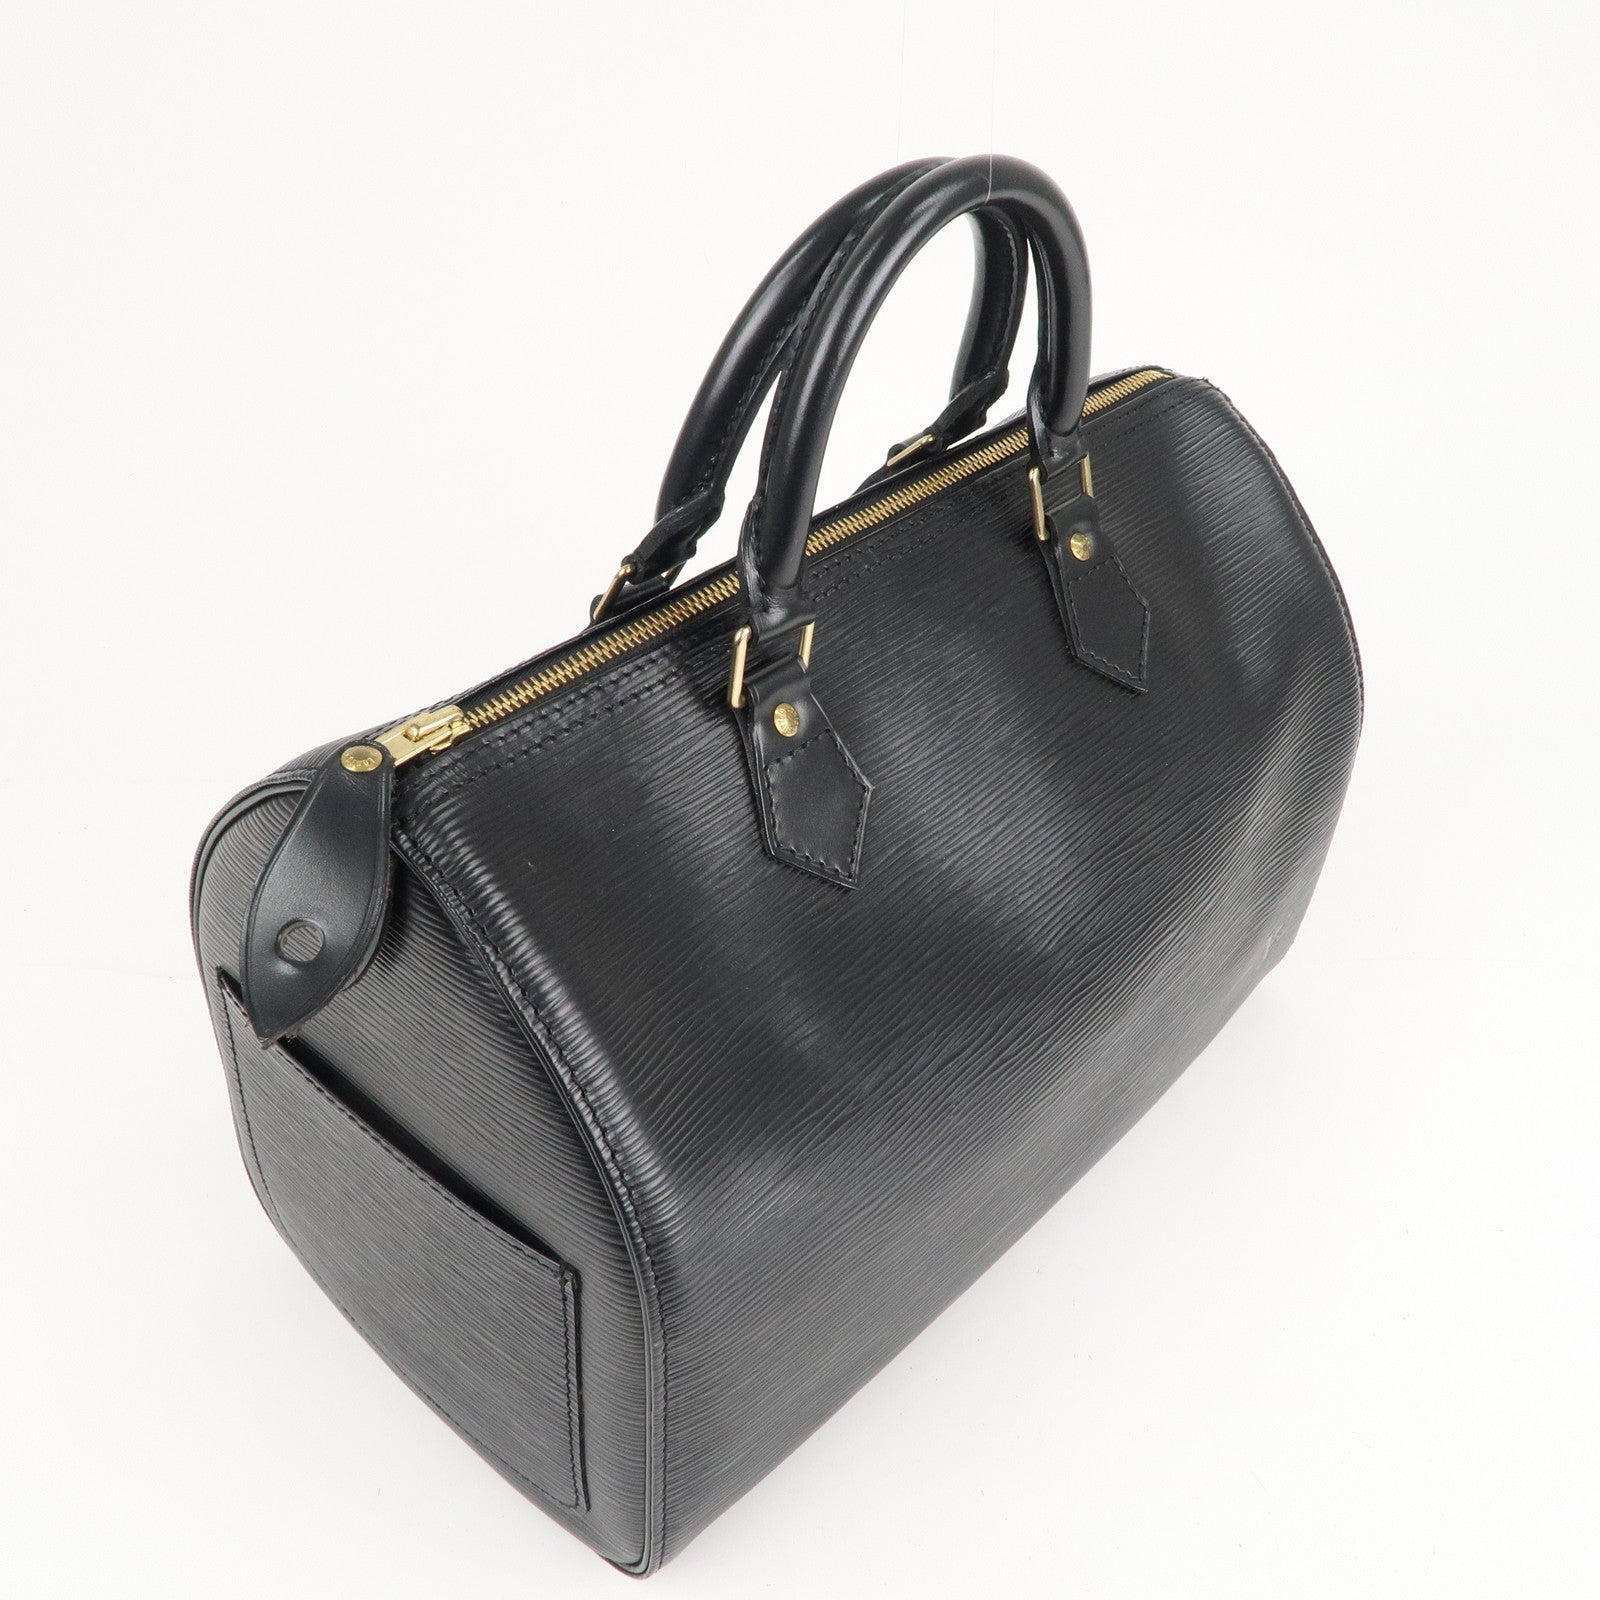 Louis Vuitton Epi Speedy 30 Handbag Leather Noir Black M59022 in